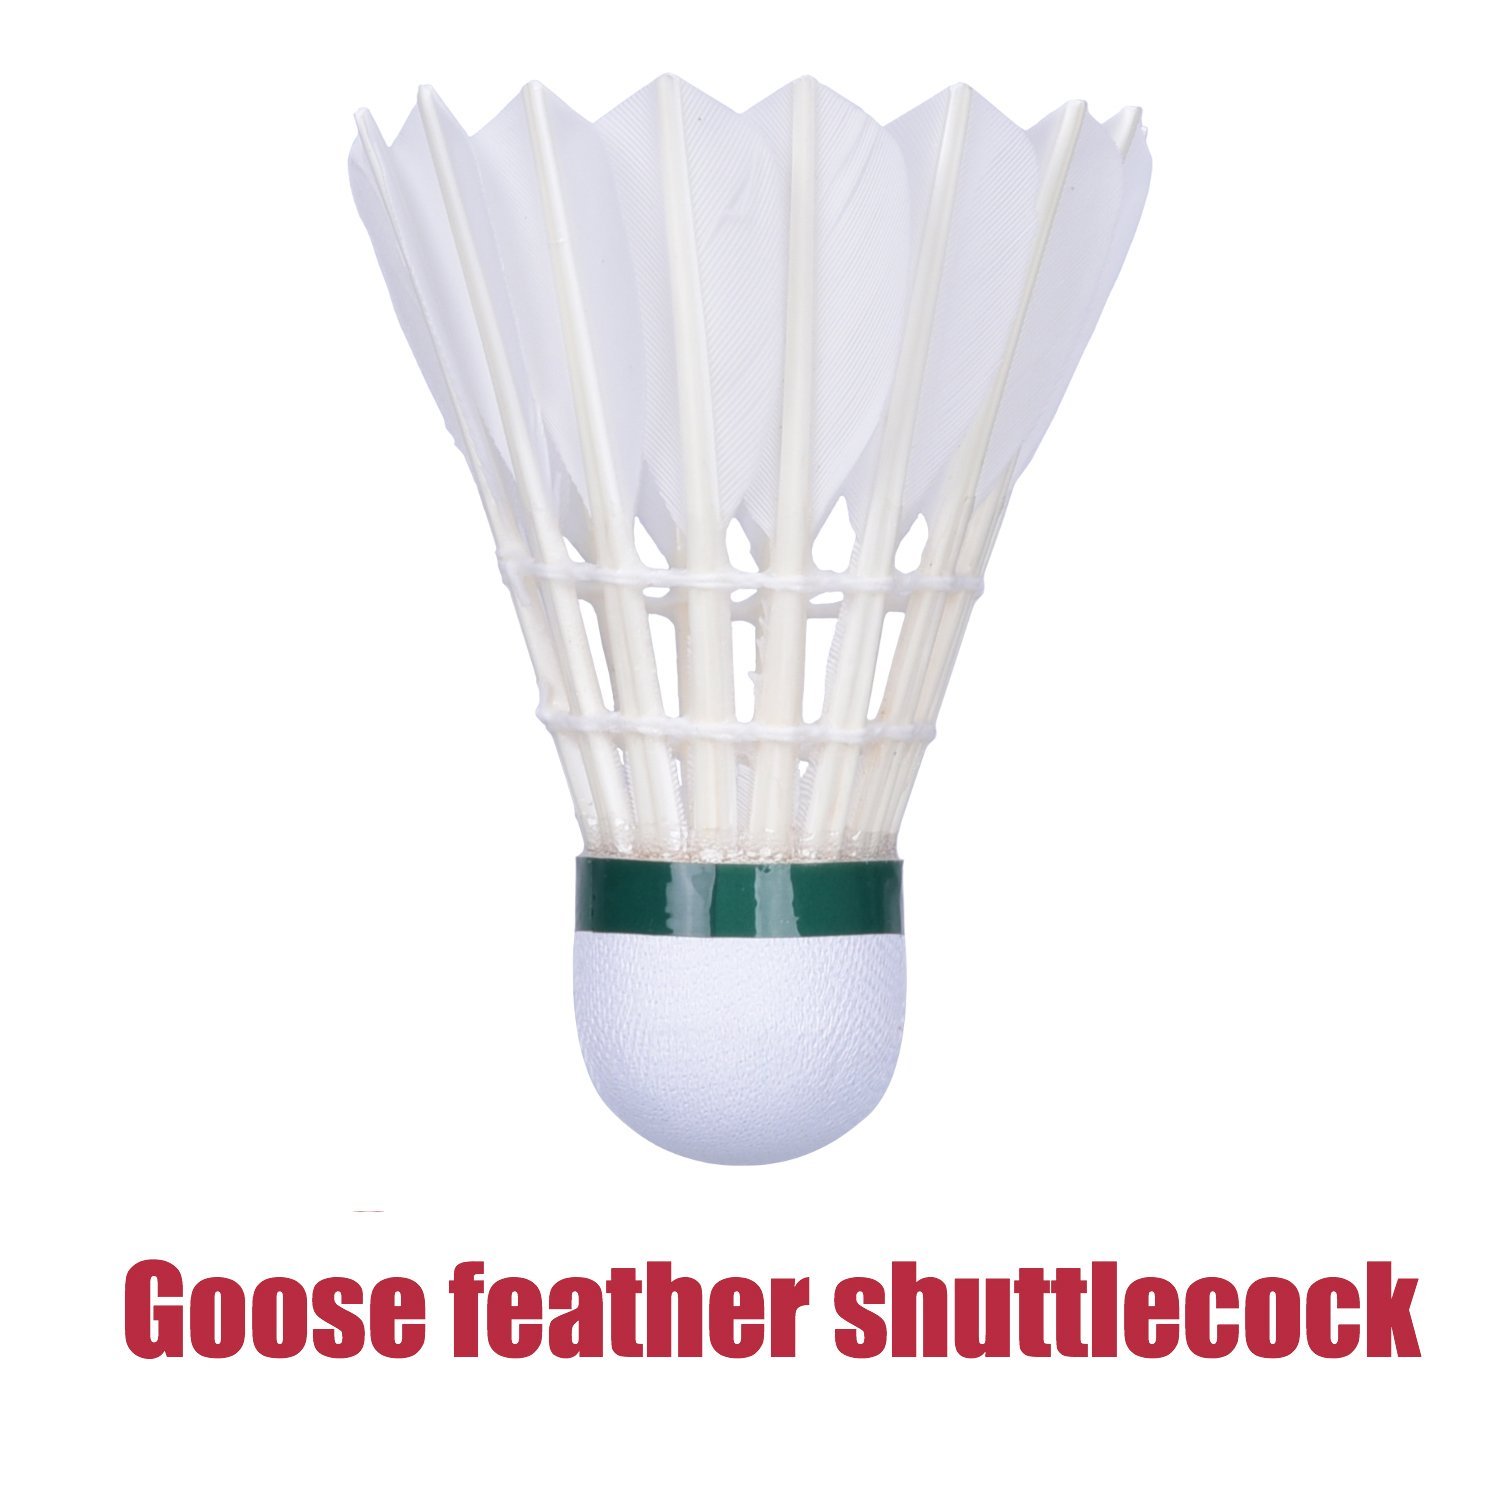 Amazon.com : 12-Pack Badminton Shuttlecocks Advanced Goose Feather ...